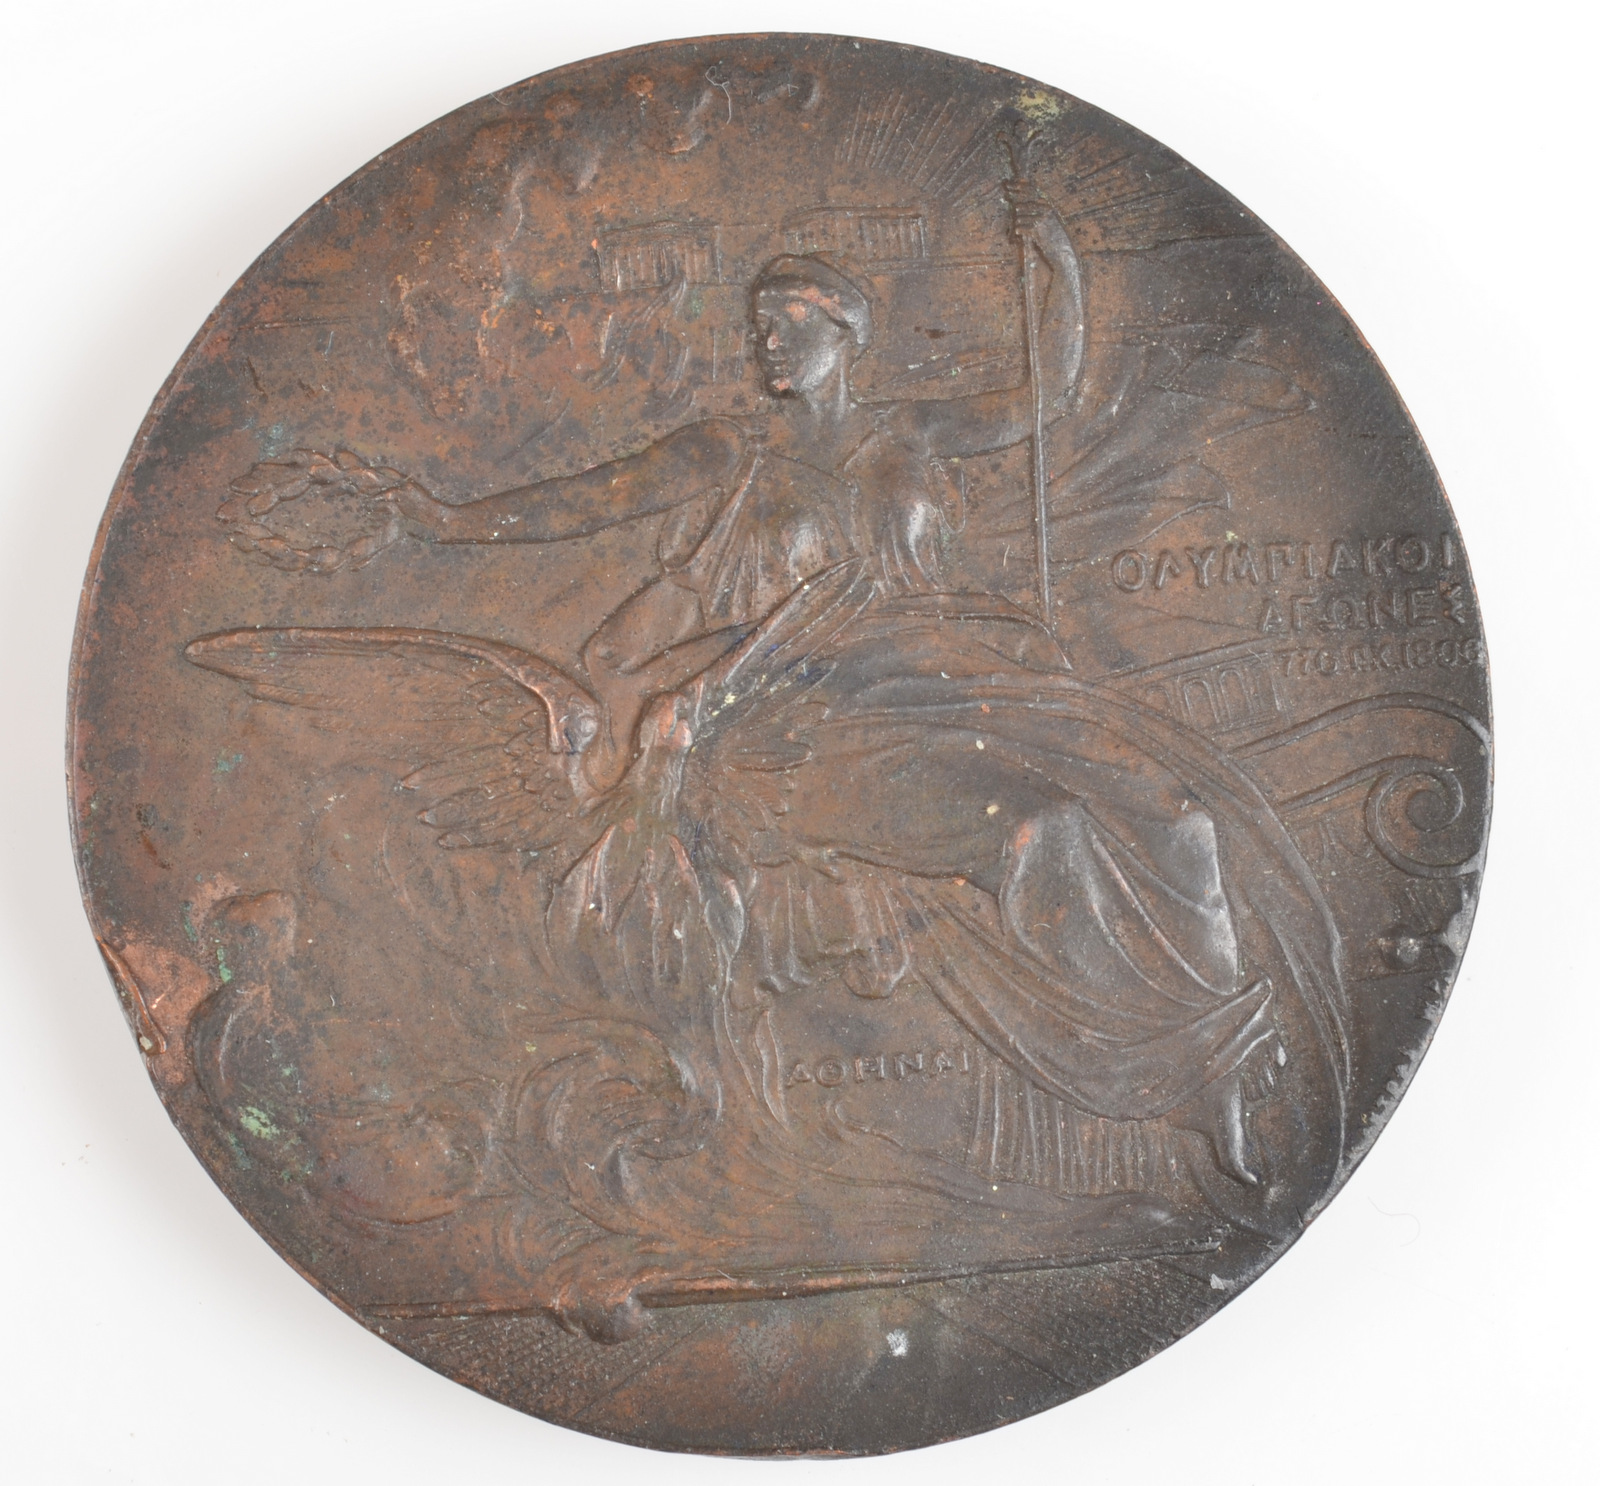 1906 Olympics:- A bronze Competitor Participation medal, diameter 5 cm.